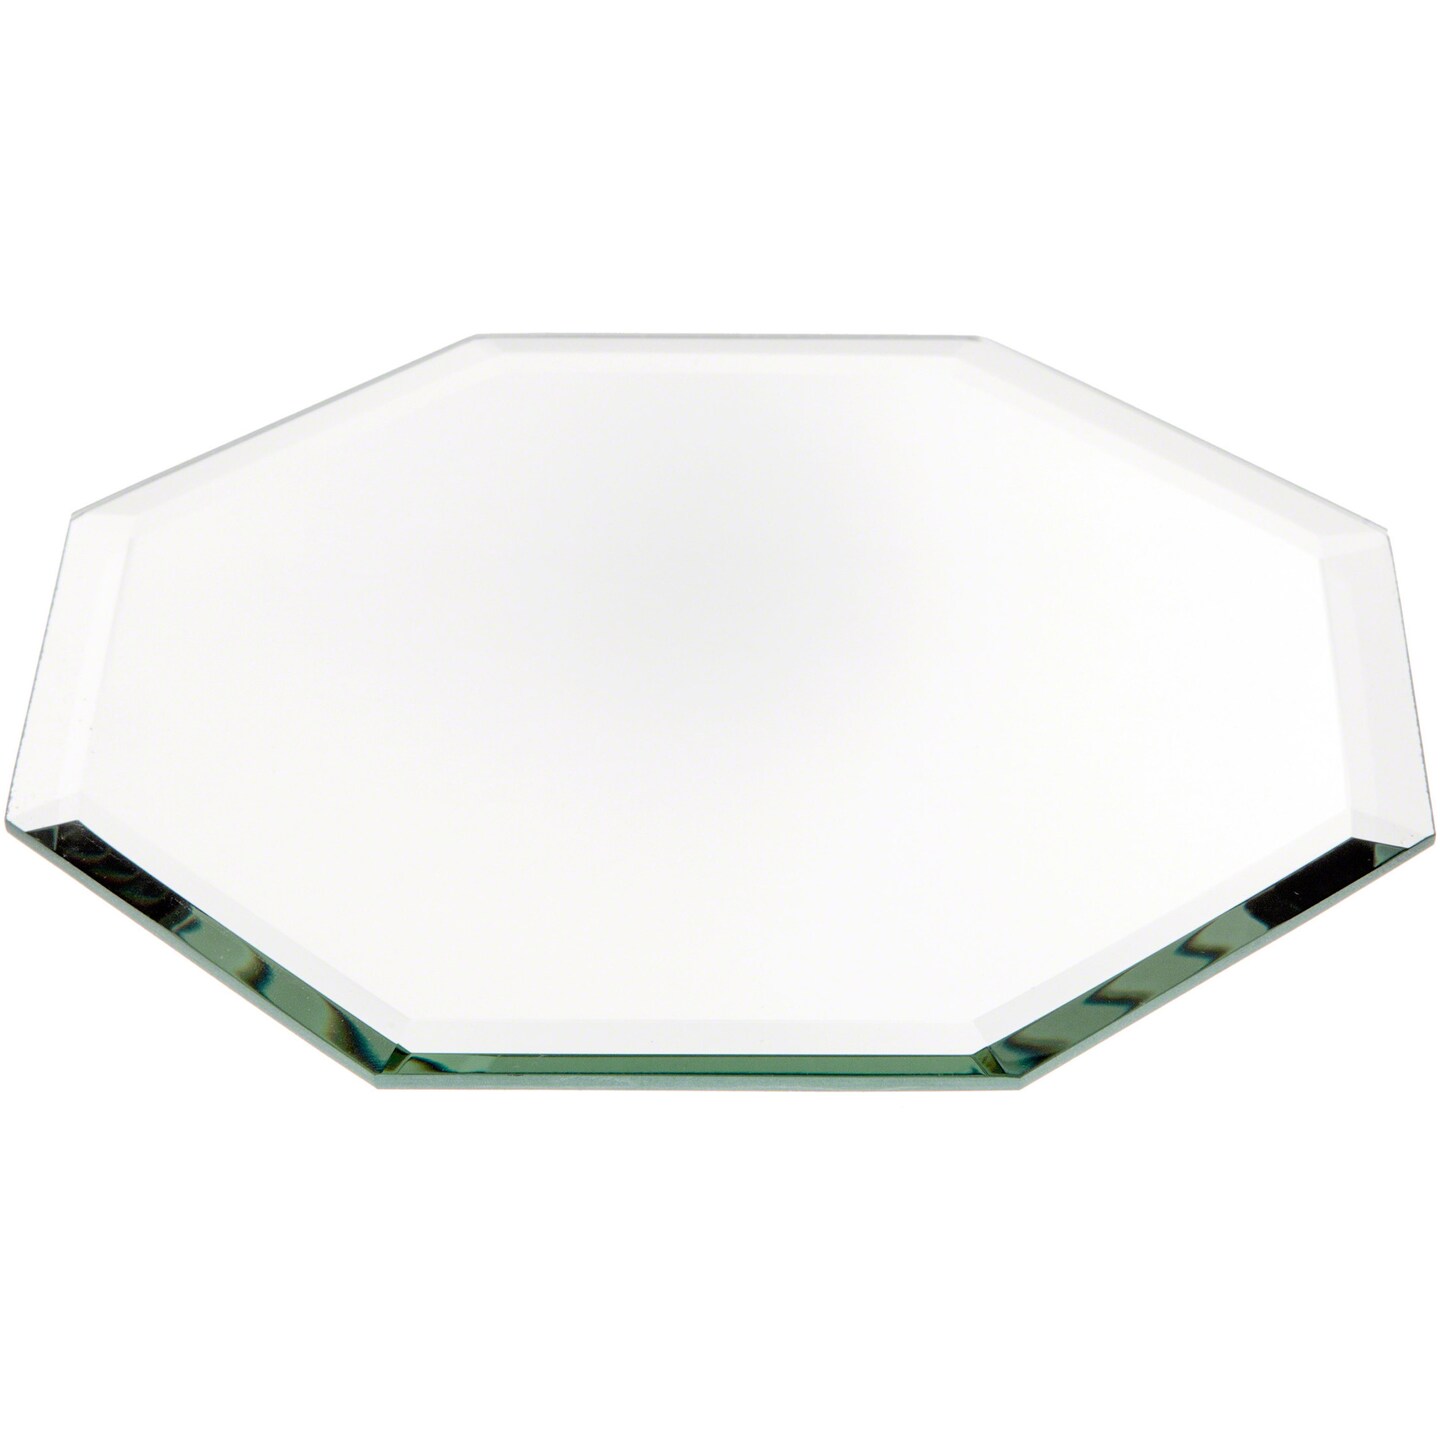 Plymor Octagon 3mm Beveled Glass Mirror, 5 inch x 5 inch